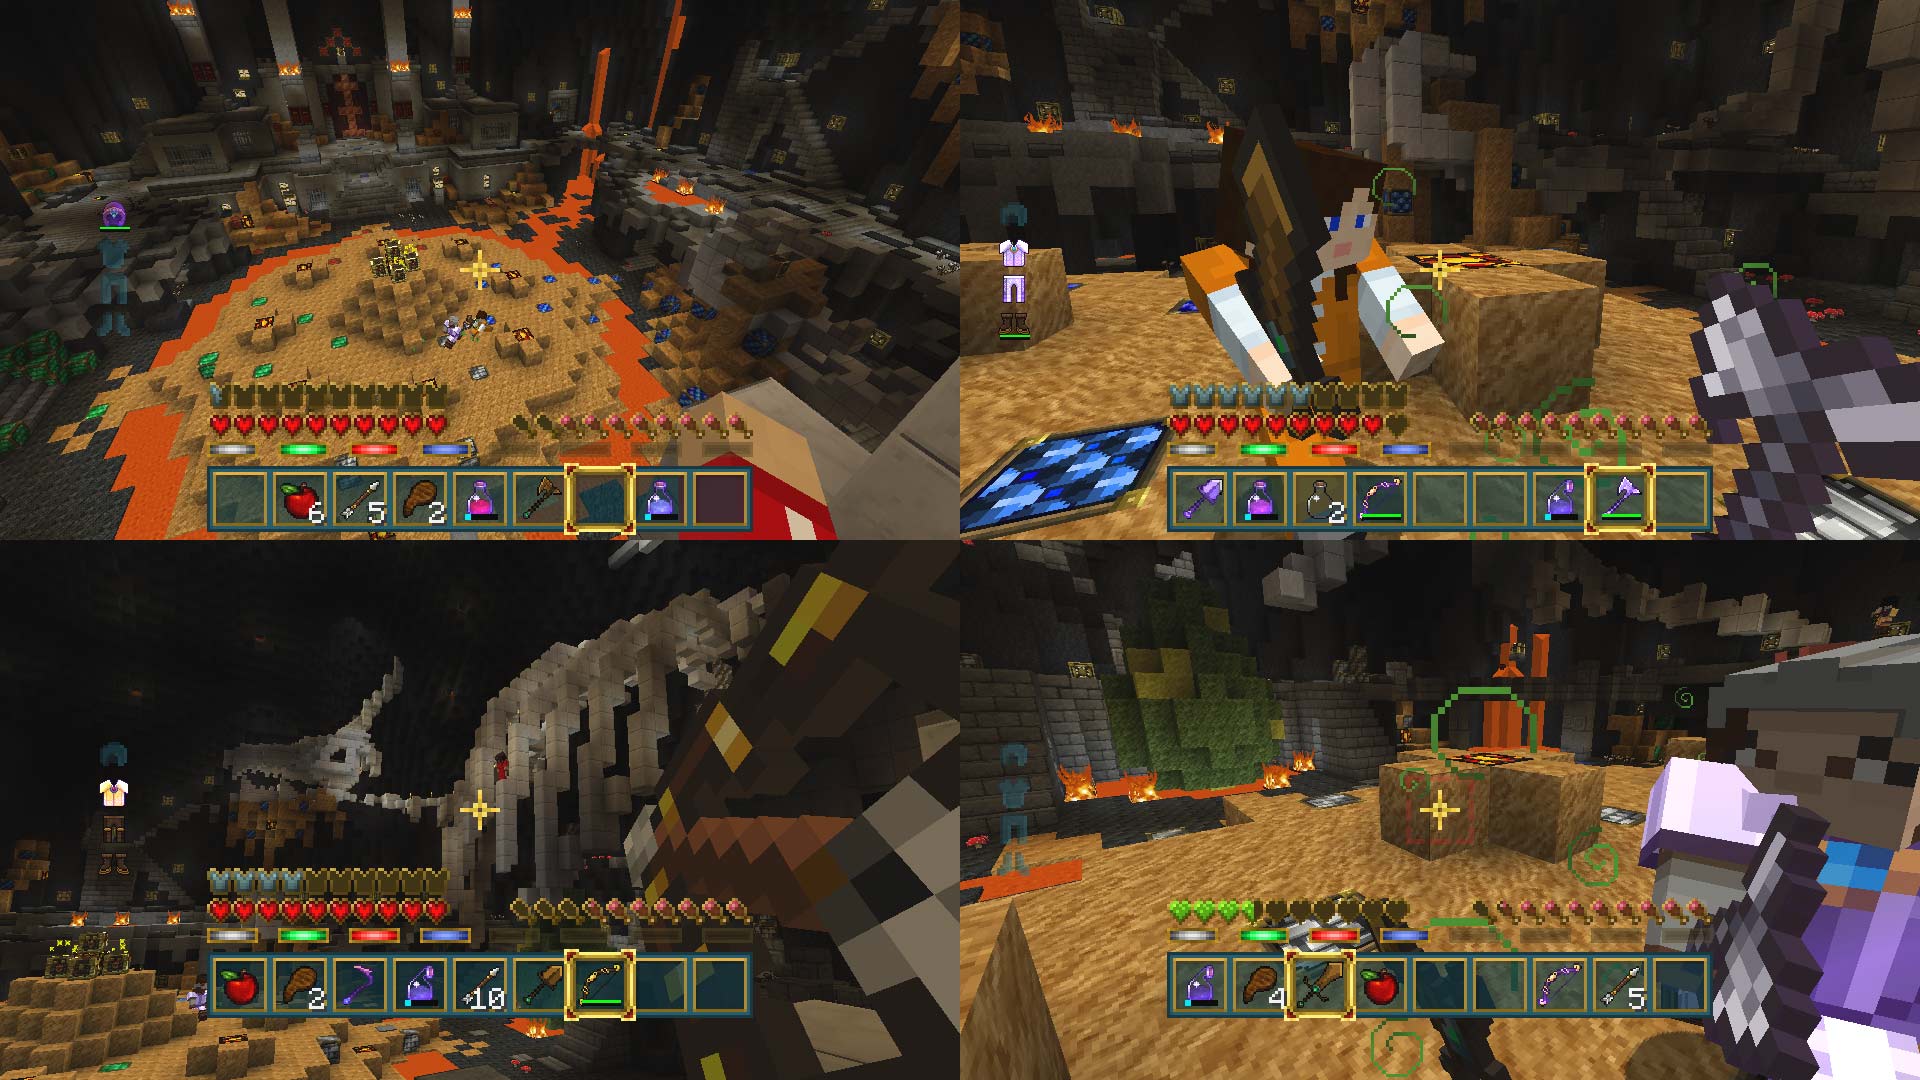 Minecraft Battle Map Pack 1